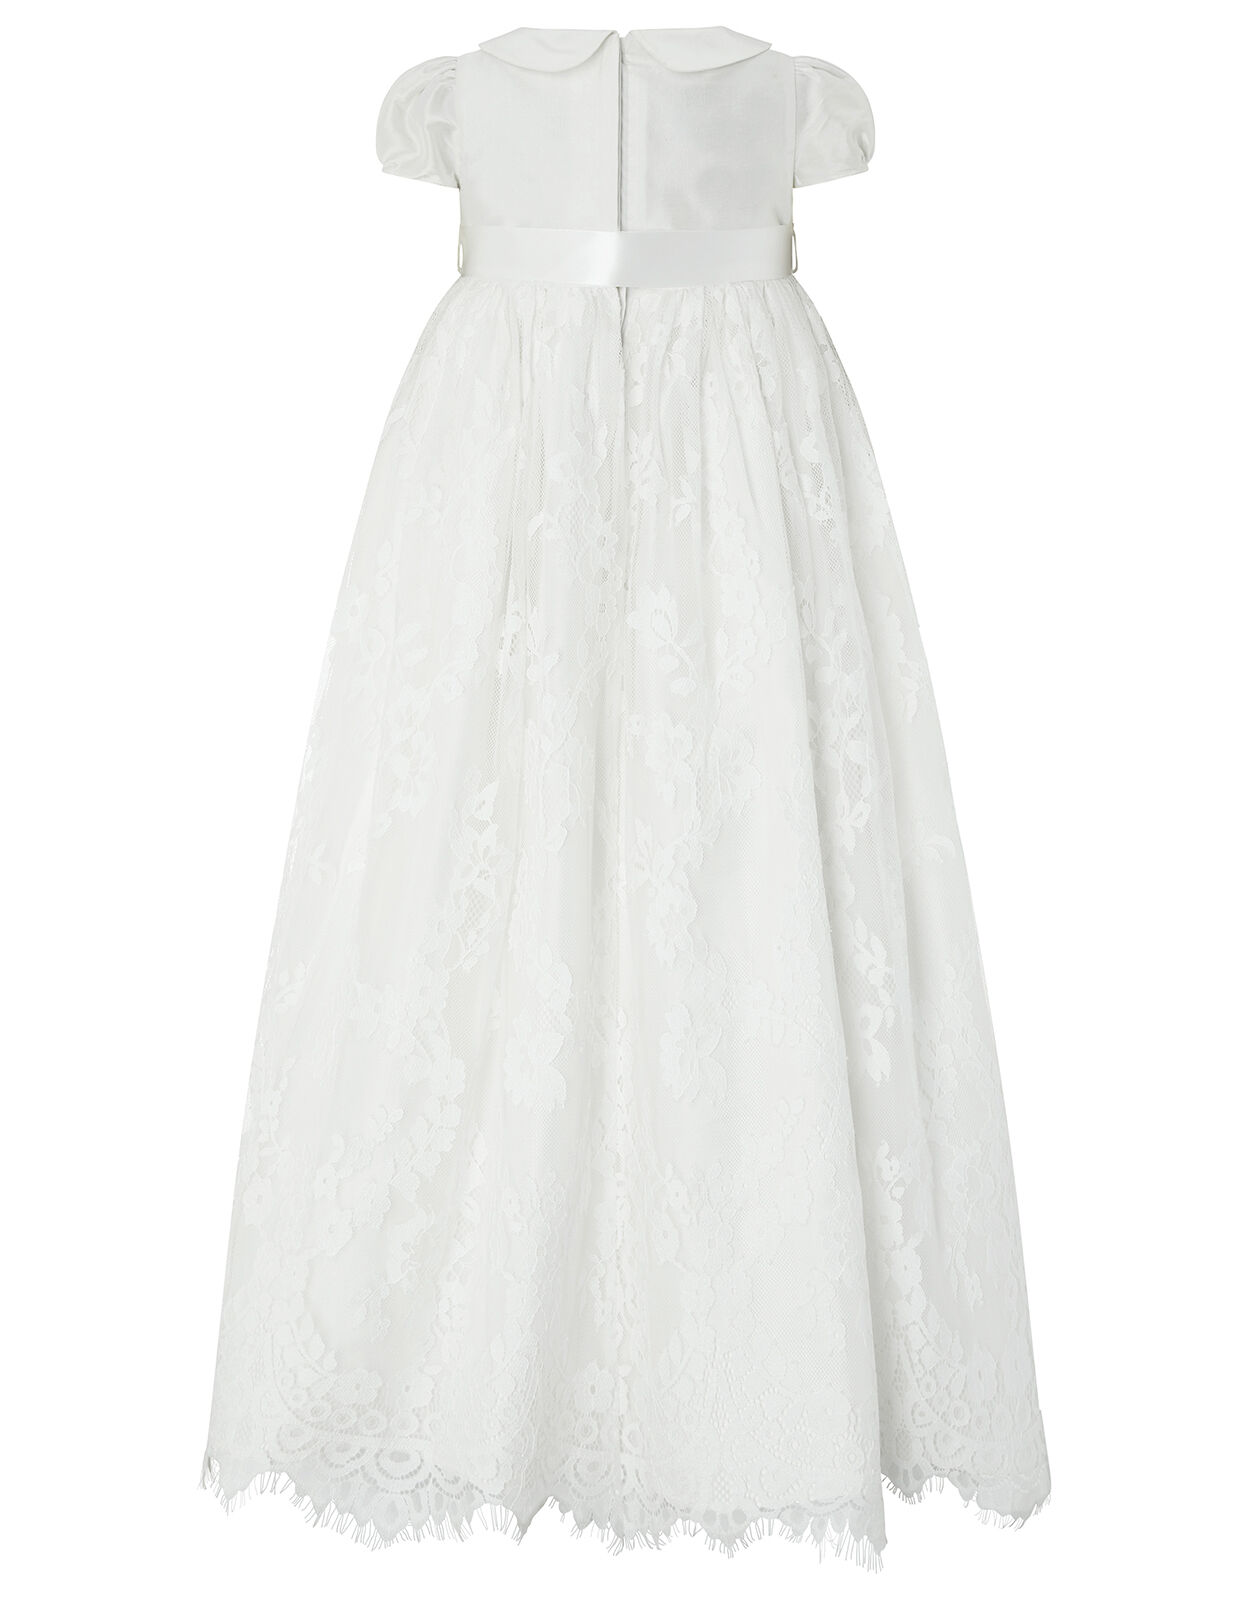 simple cream colored wedding dresses